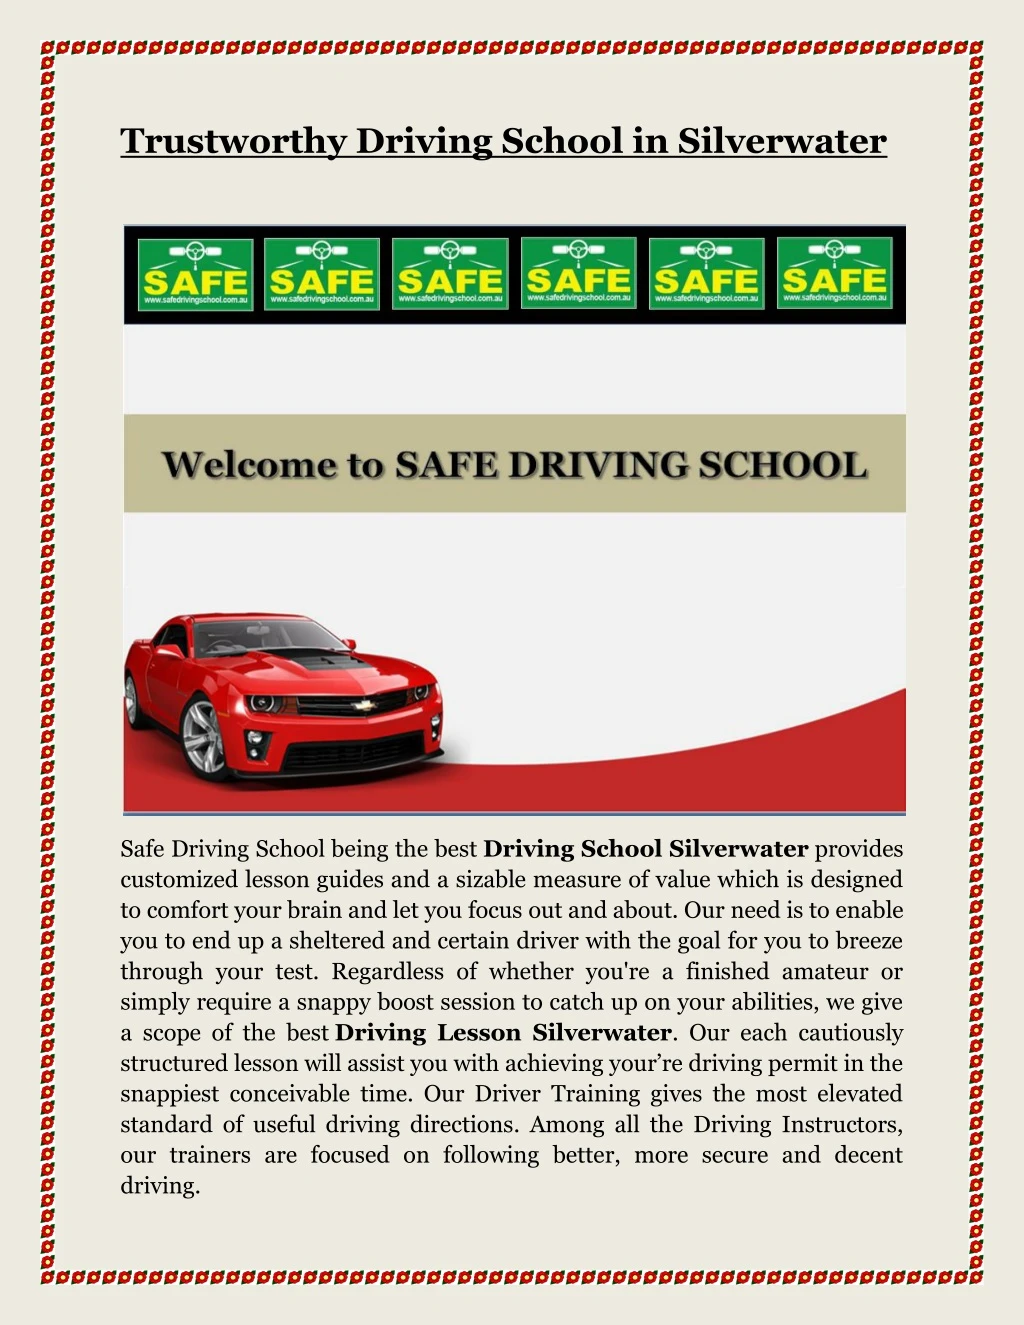 trustworthy driving school in silverwater